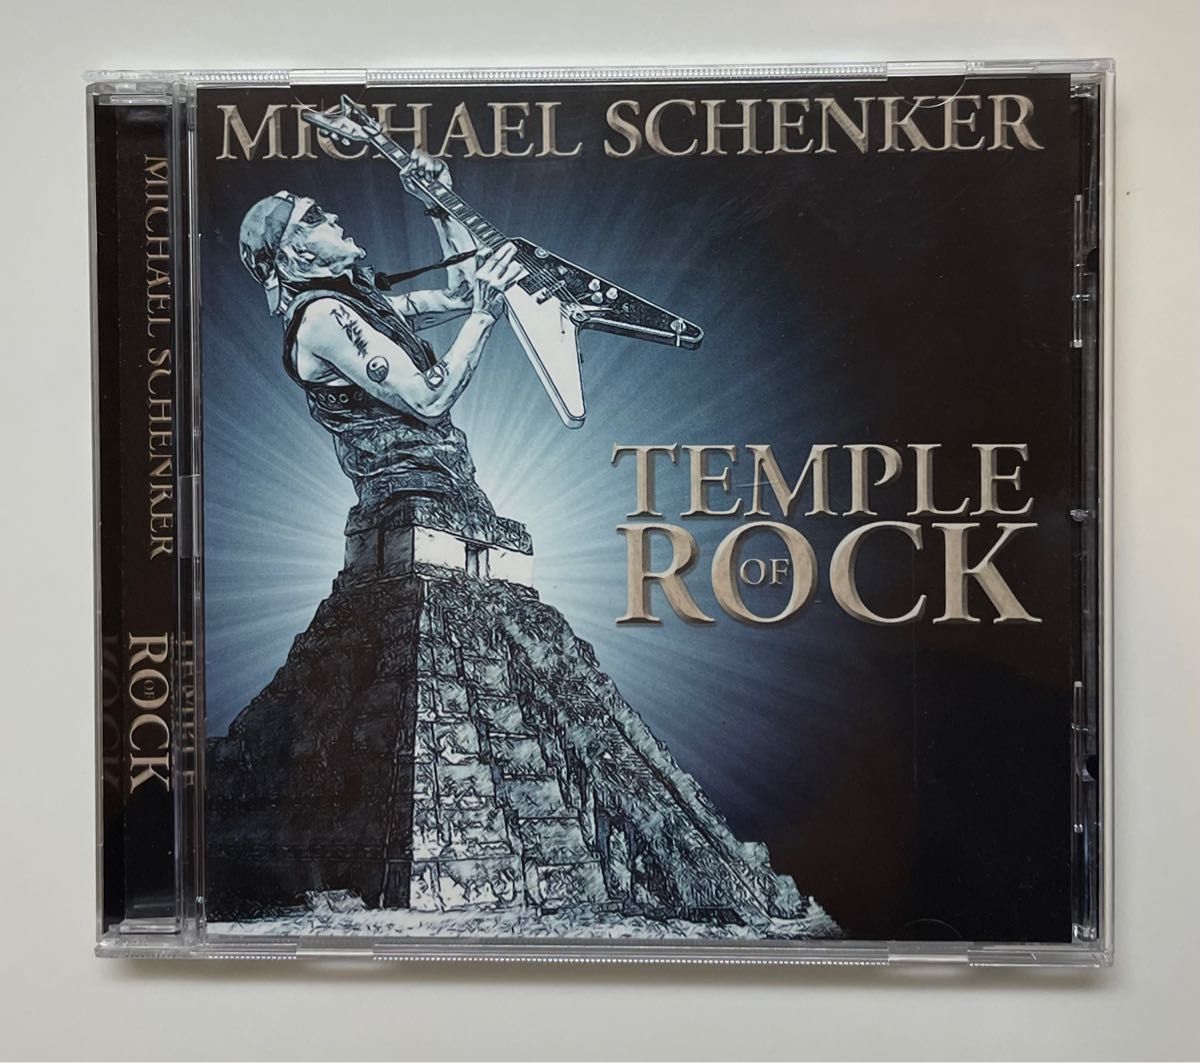 【CD】Michael Schenker / Temple of Rock 輸入盤